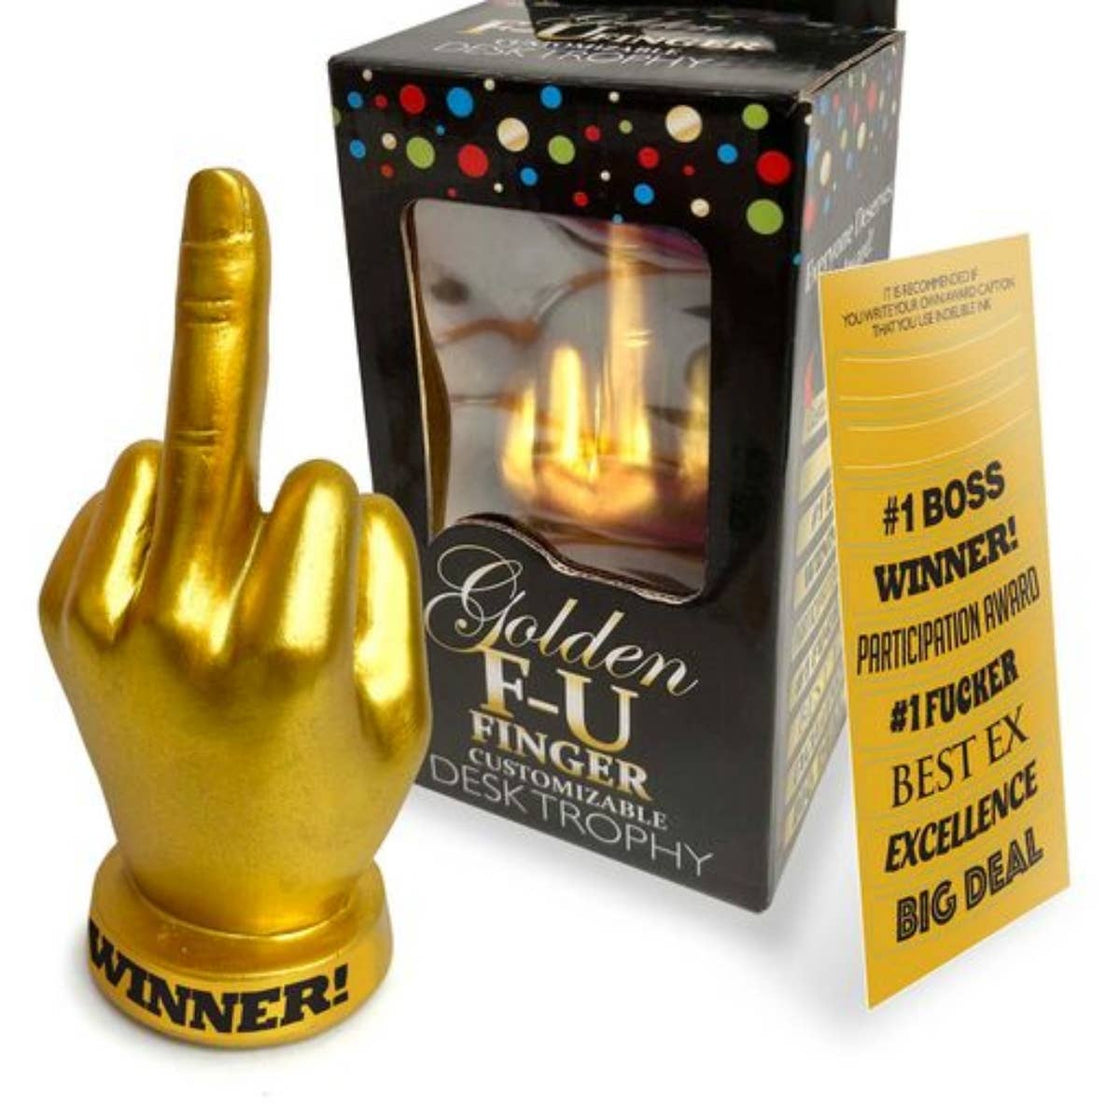 Little Genie Golden F-U Finger Trophy